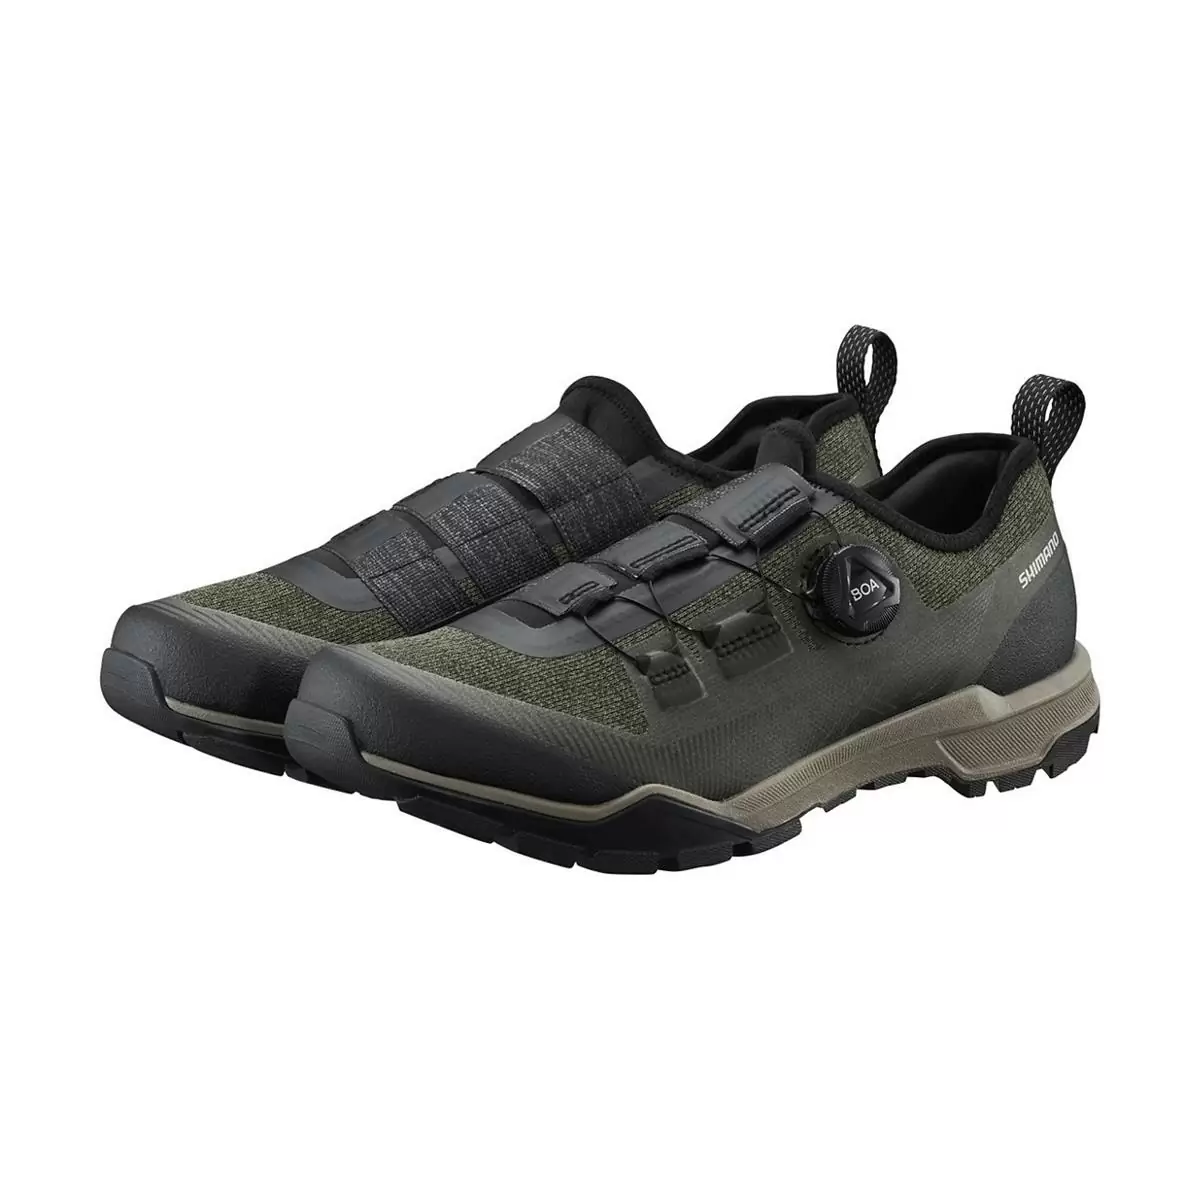 Trekking / MTB Shoes SH-EX700 Green Size 39 #4